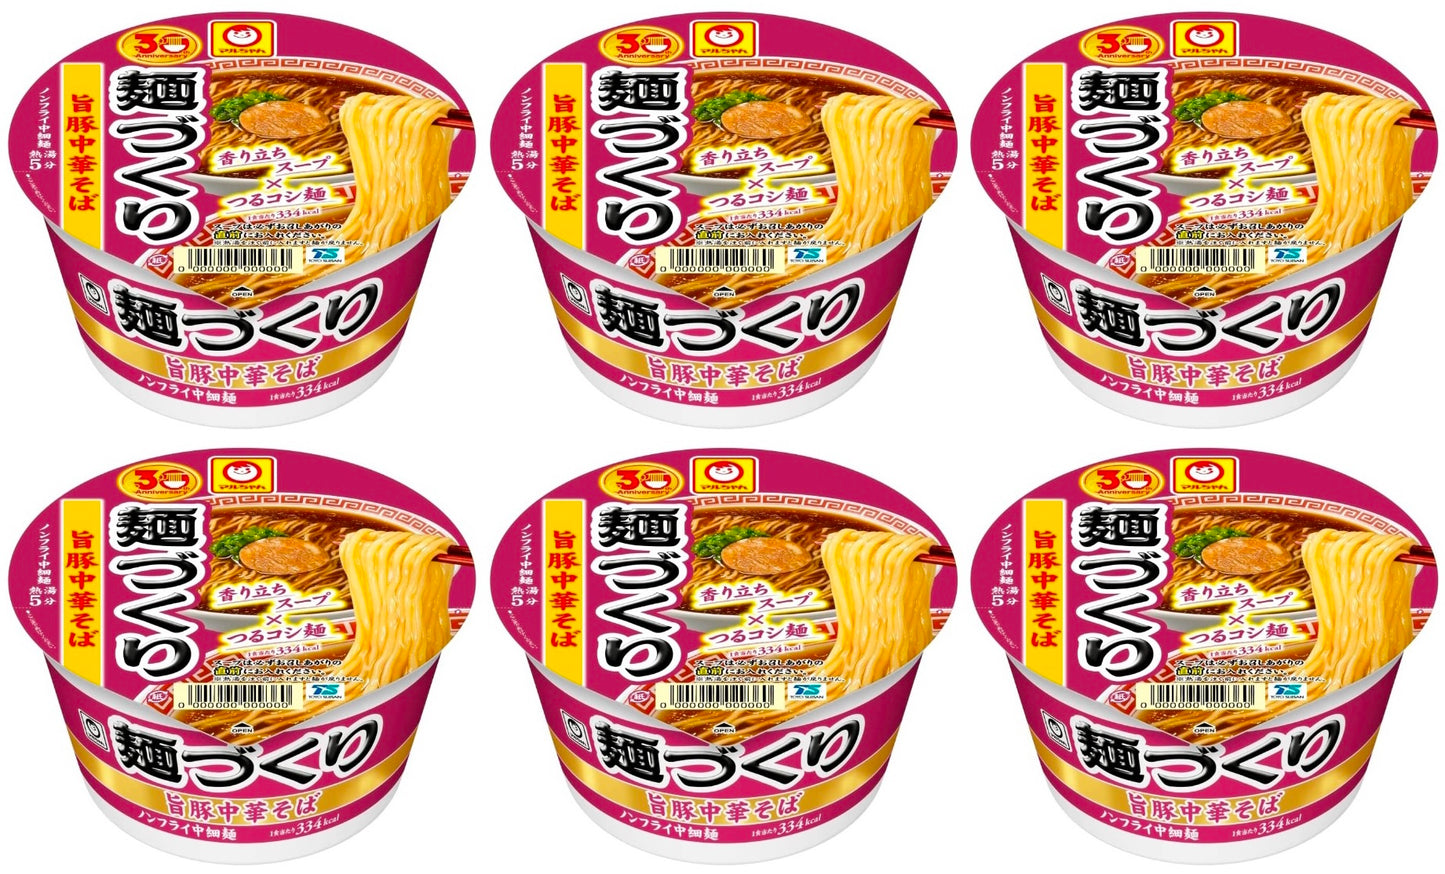 Maruchan Ramen Noodles MENDUKURI Pork Soy Sauce Cup Soup Instant Food Japan 97g